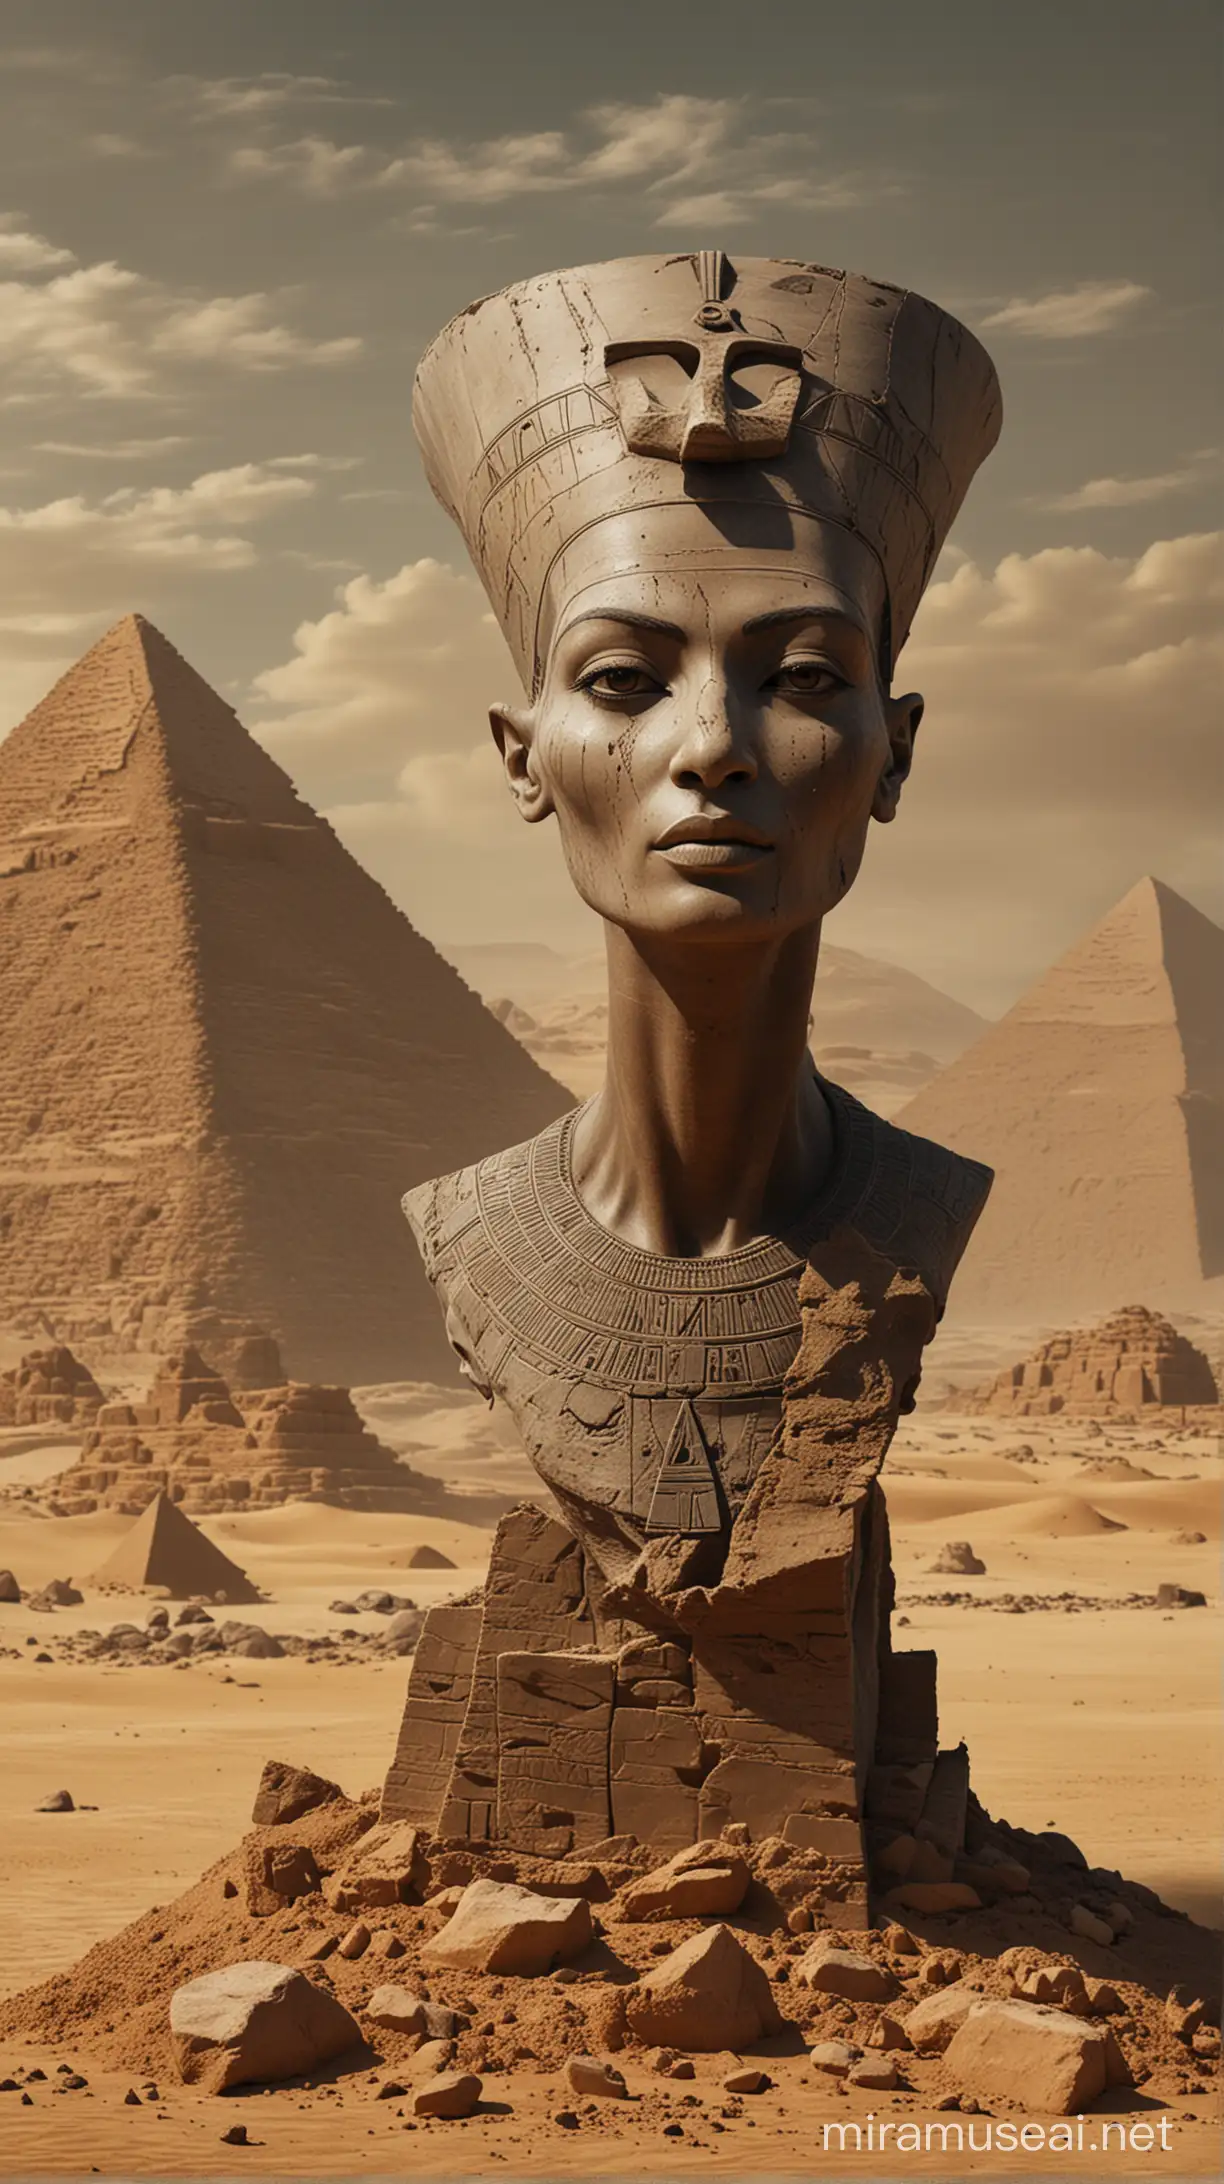 Sinister Nefertiti Terror in Bloodied Egyptian Symbology